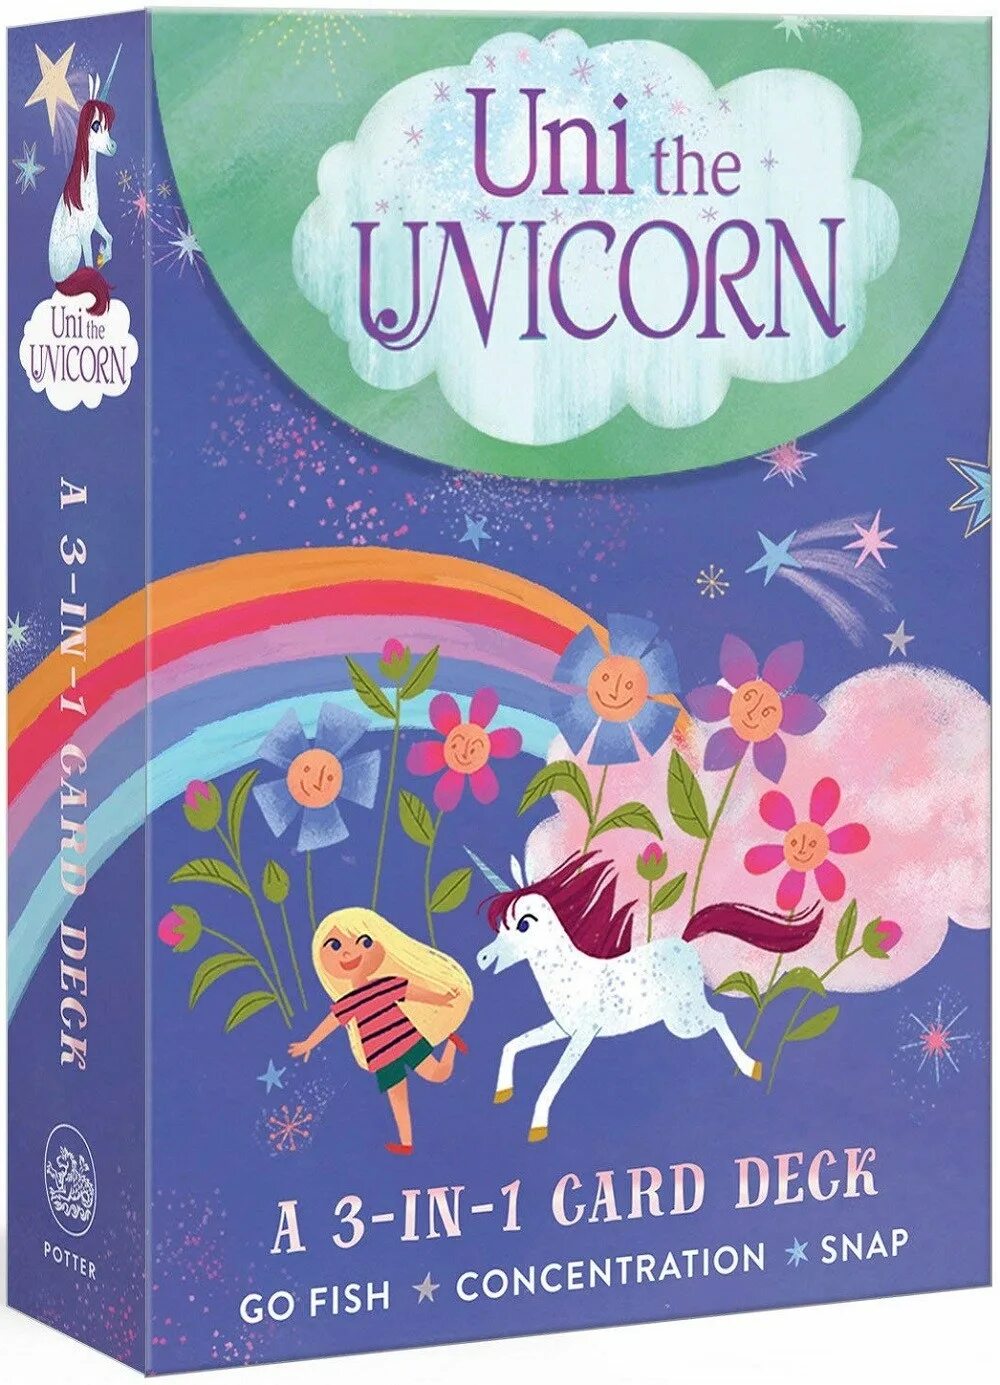 Unicorn книги. Юникорн бук вокруг одни. Go Fish a 3-in-1 Card Deck. Unicorn book